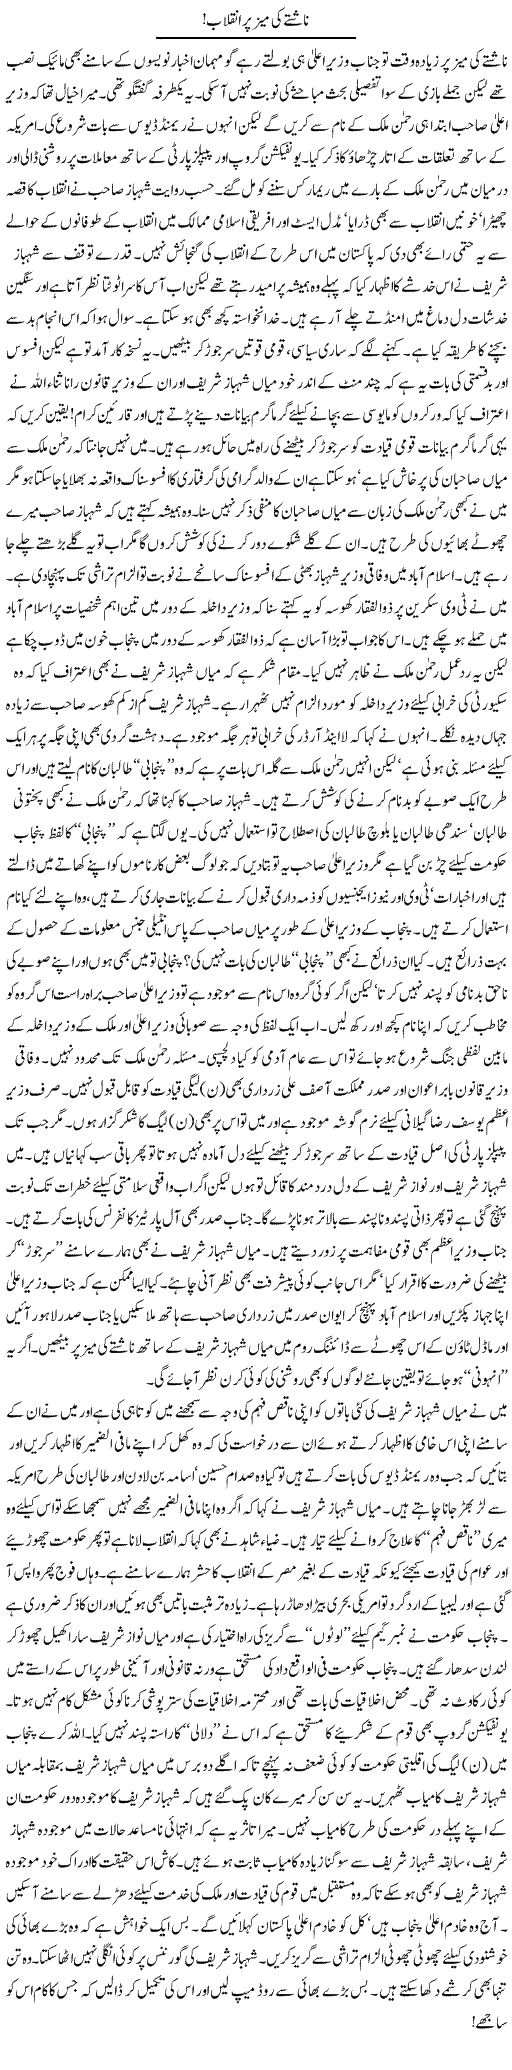 Shahbaz Sharif Express Column Asadullah Ghalib 6 March 2011